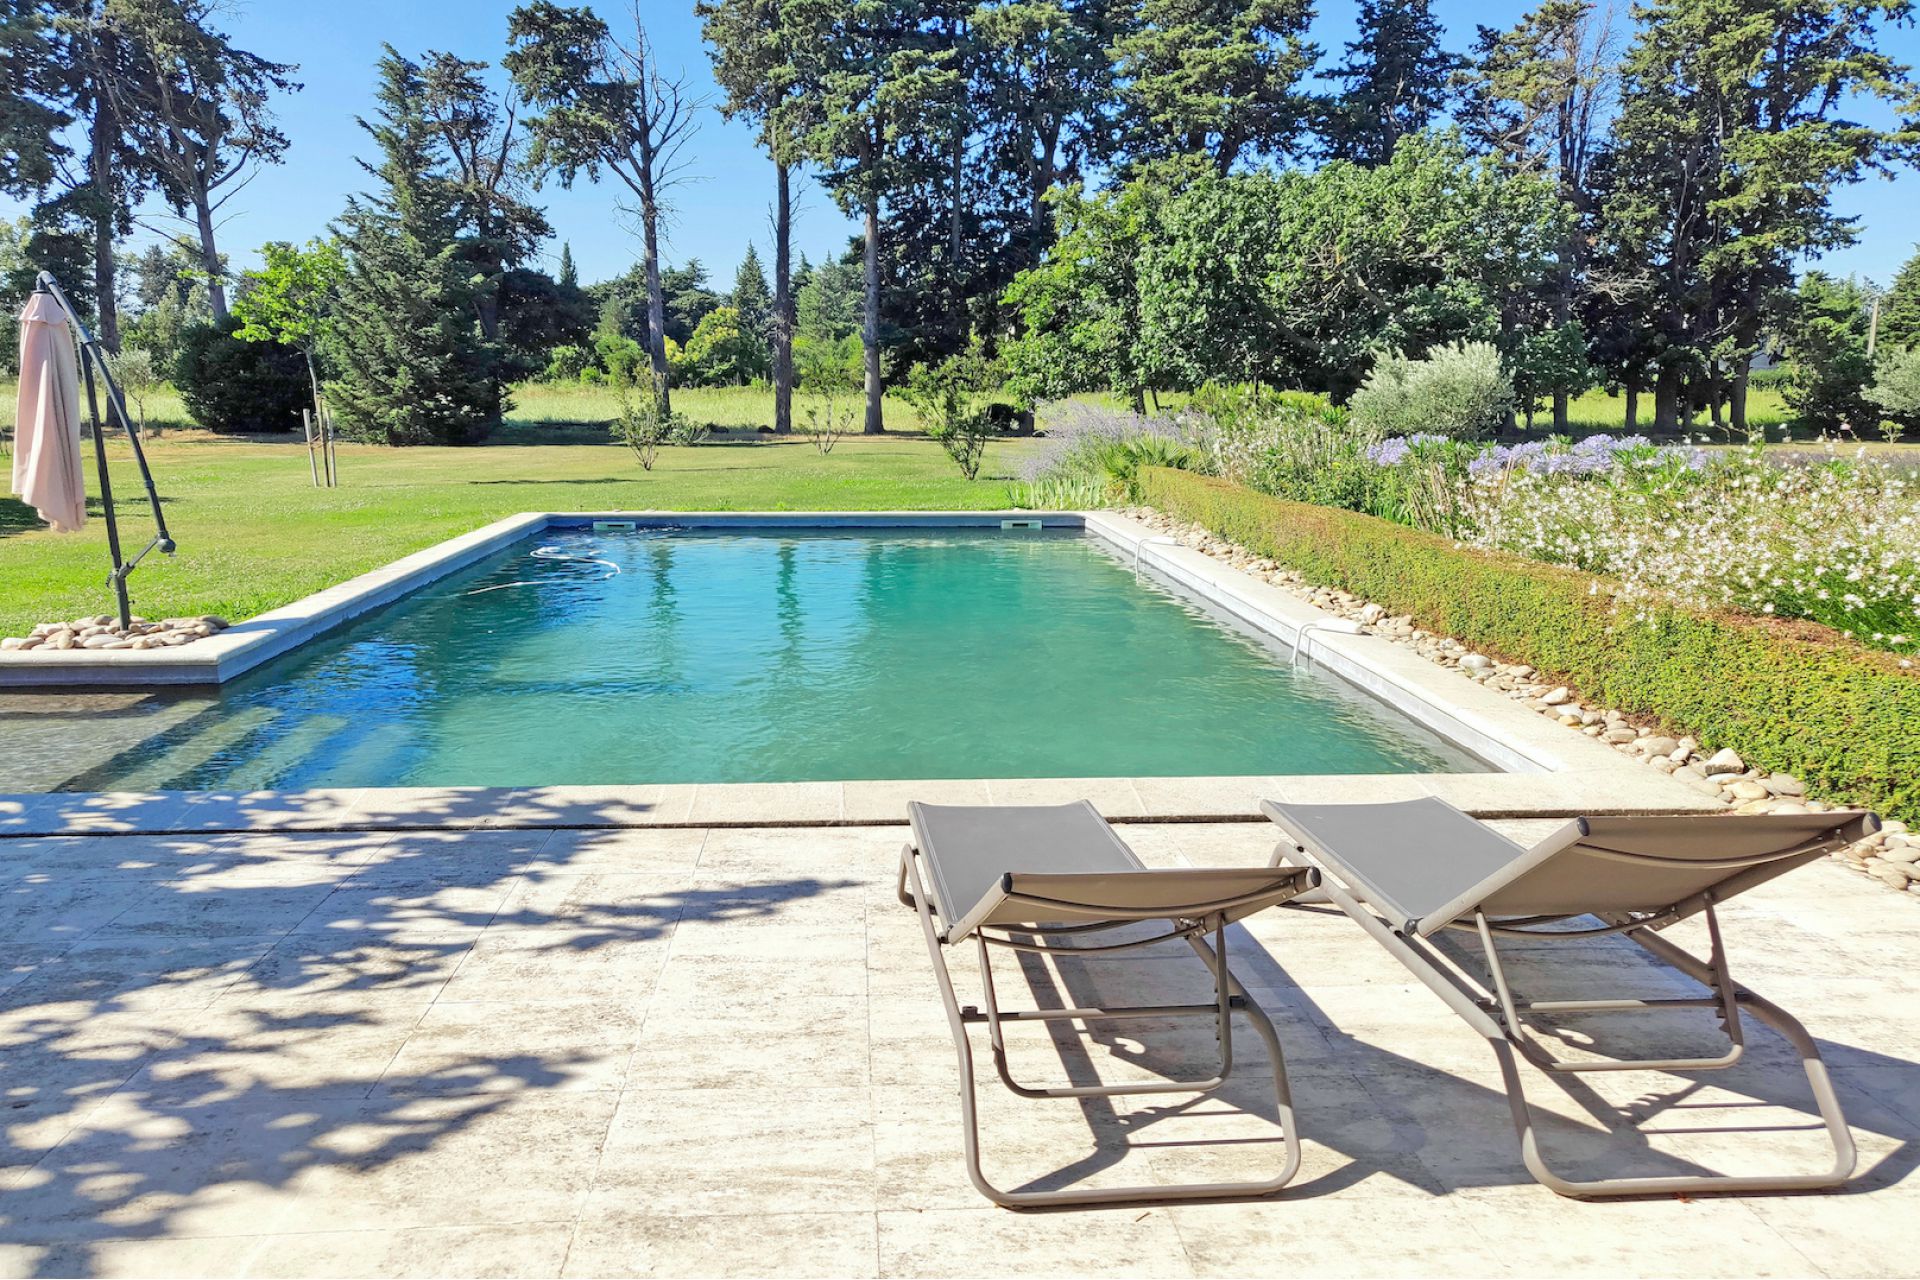 Méditerranée Location Mas with Private pool in Châteaurenard, Provence